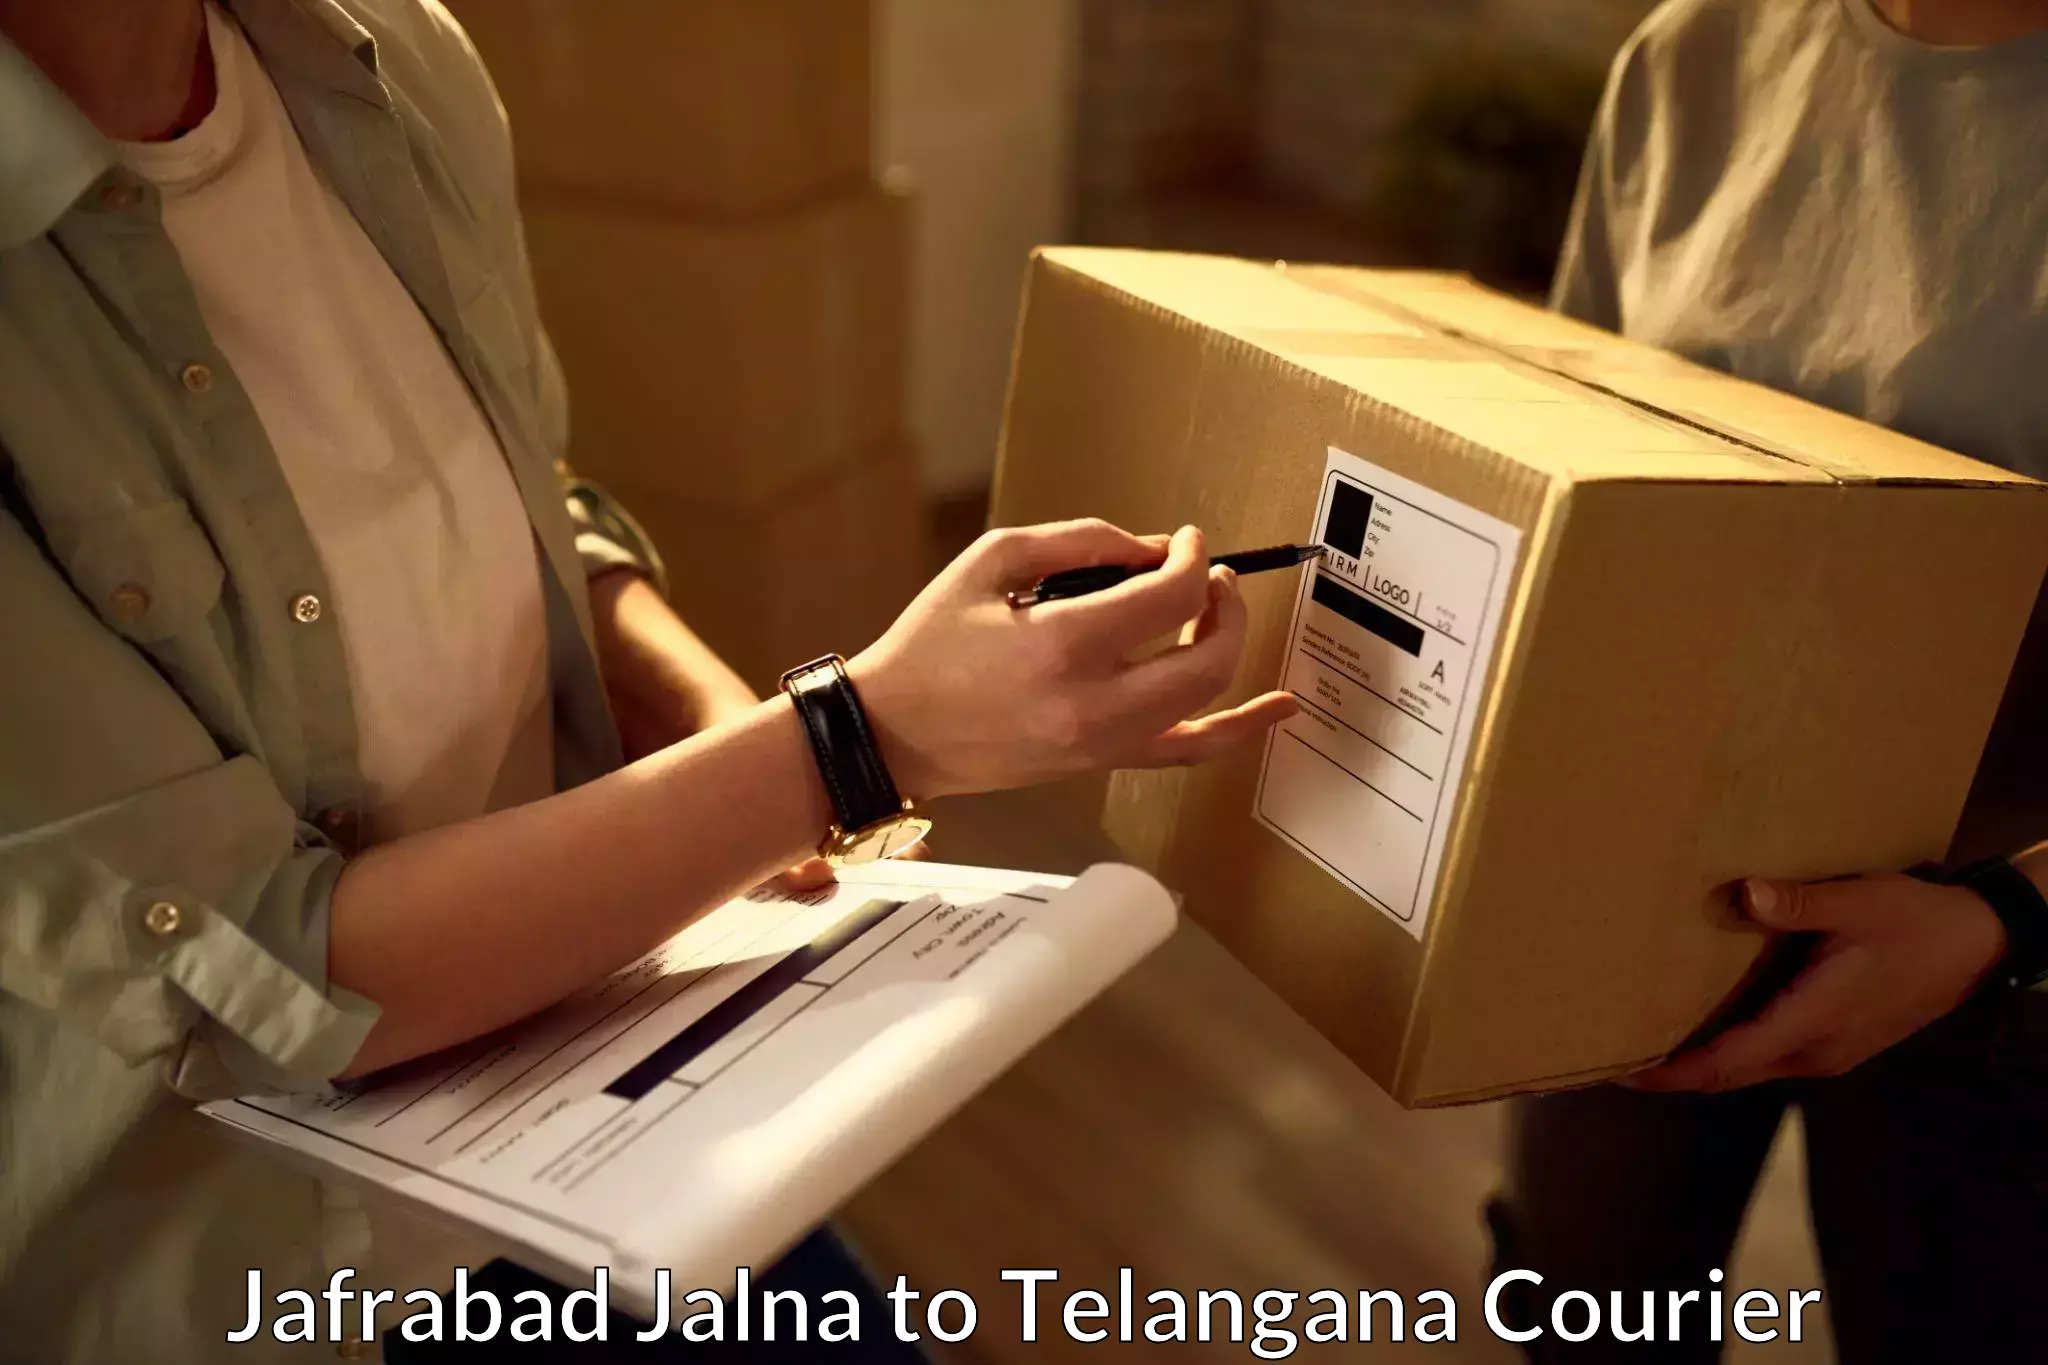 Global shipping networks Jafrabad Jalna to Jannaram